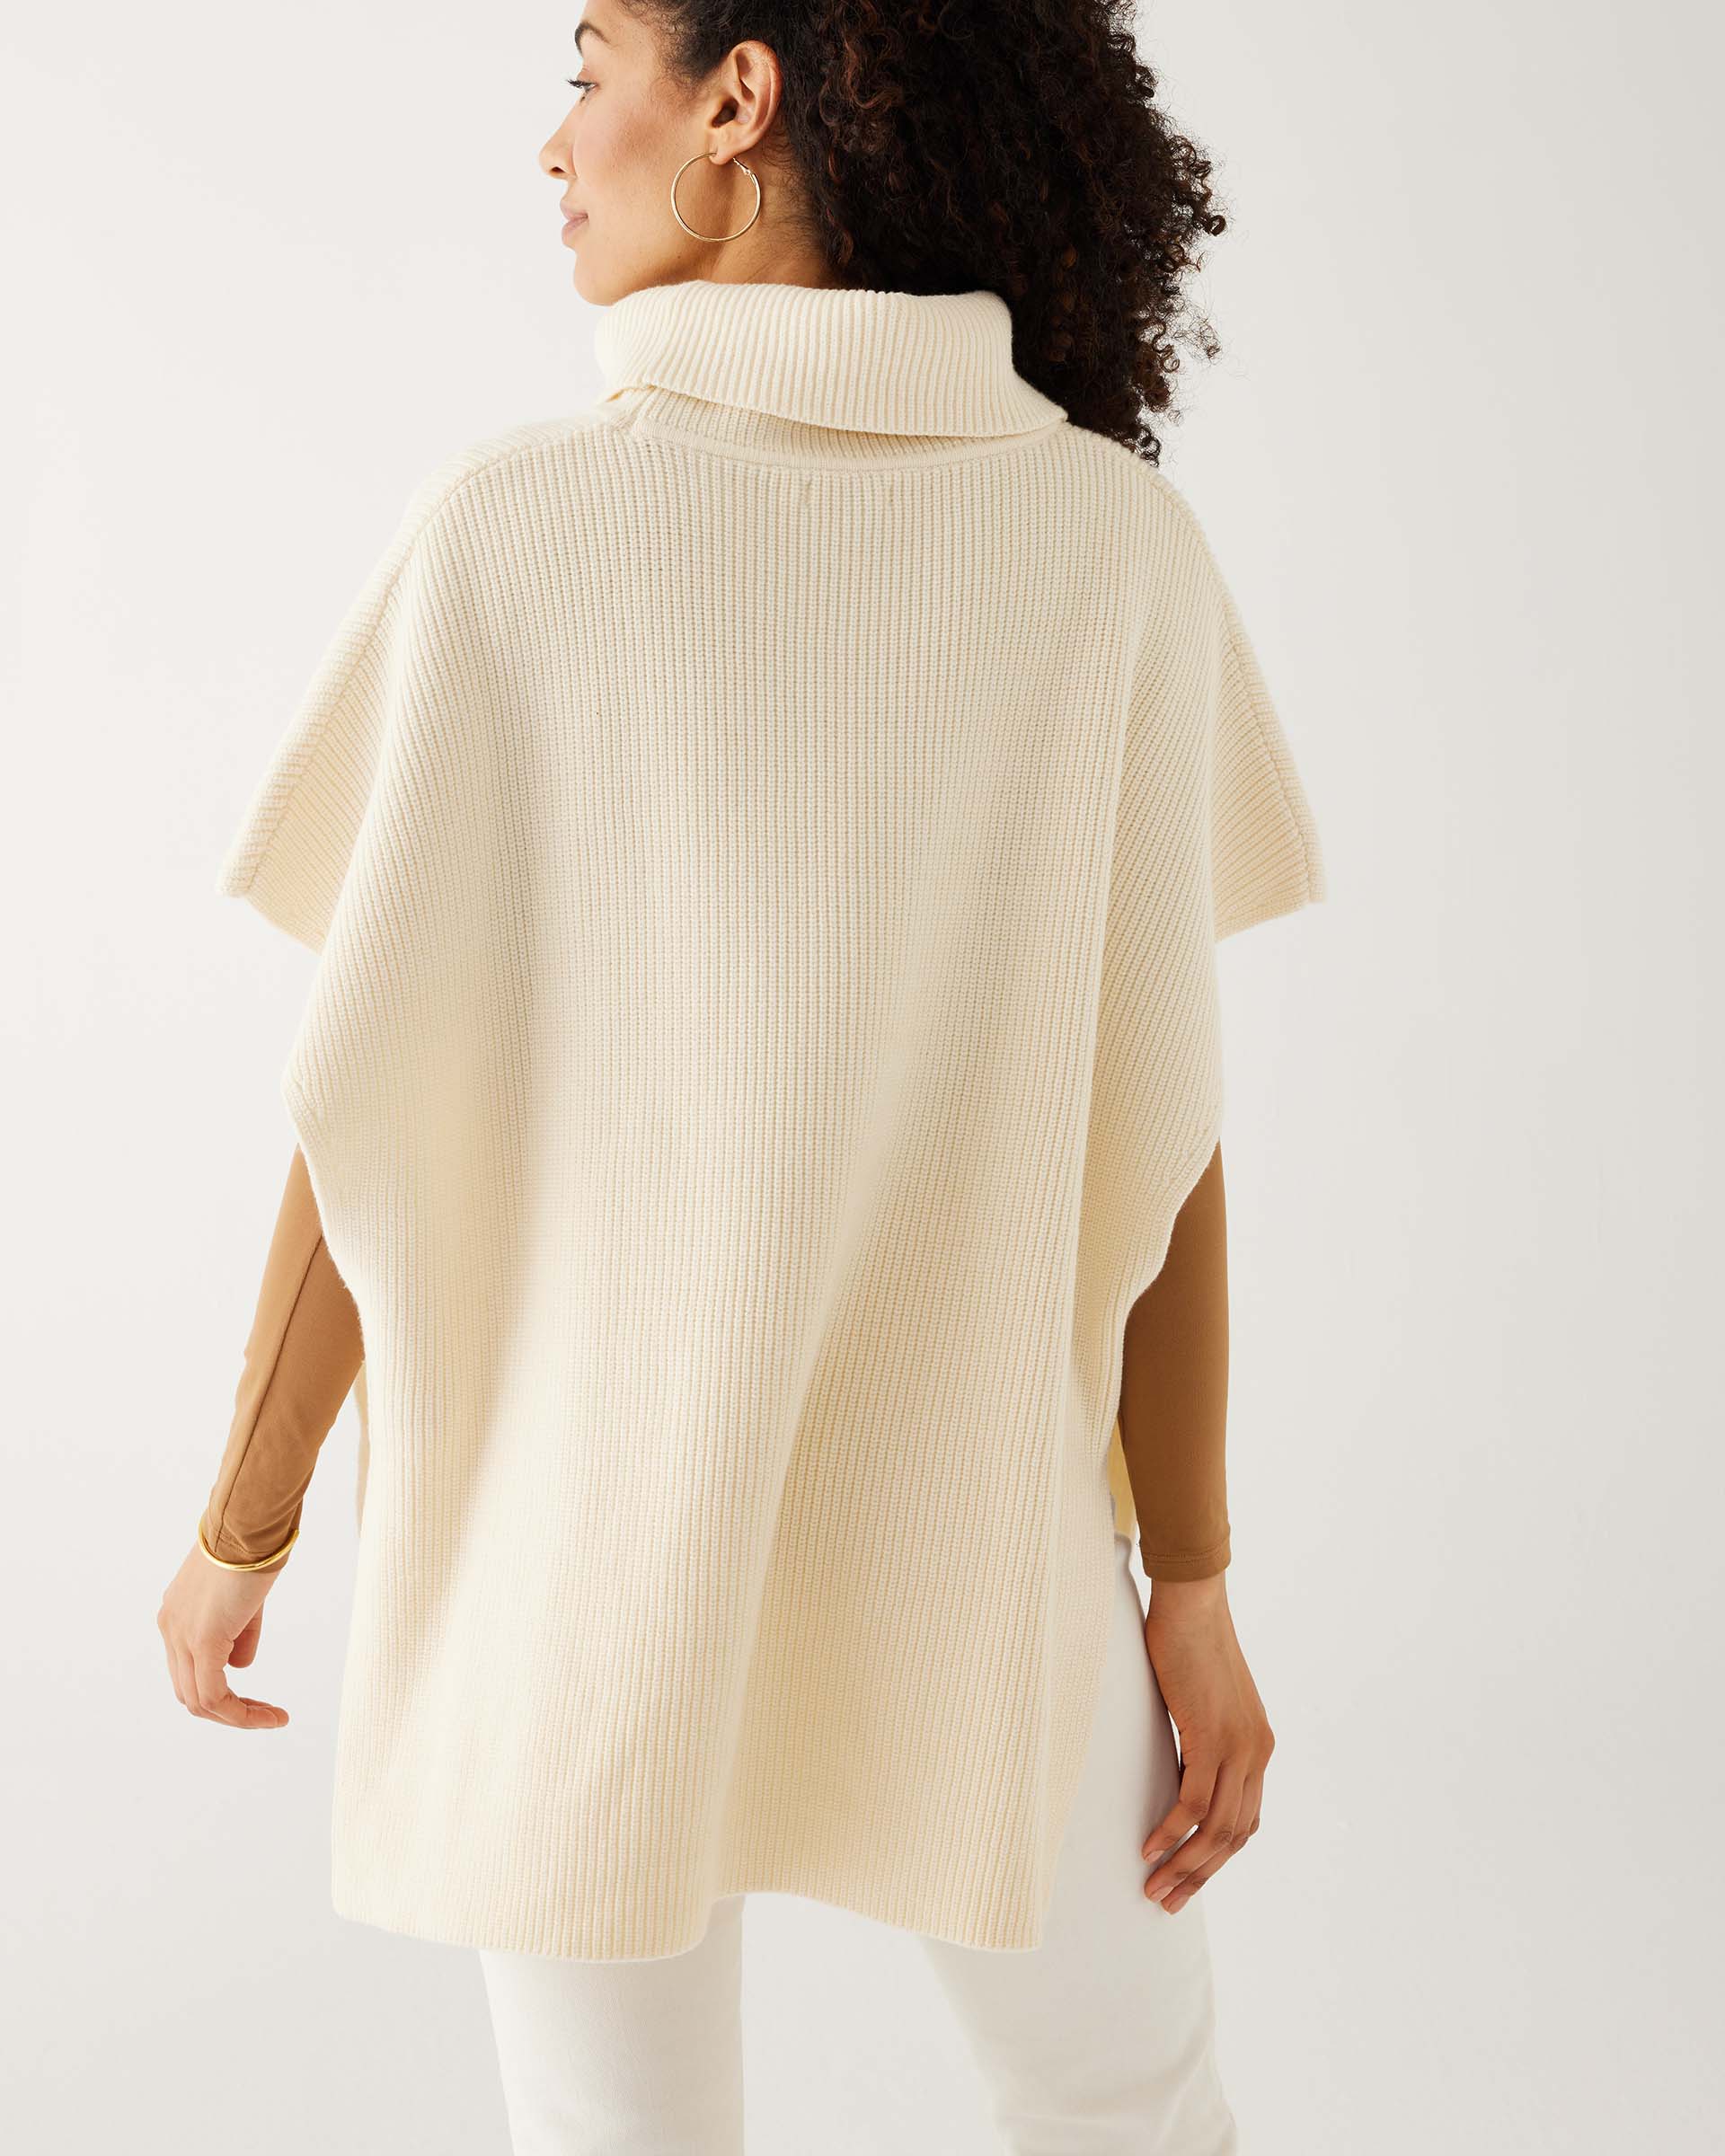 rearview of woman wearing Anywear sweater vest with open sides in winter wheat